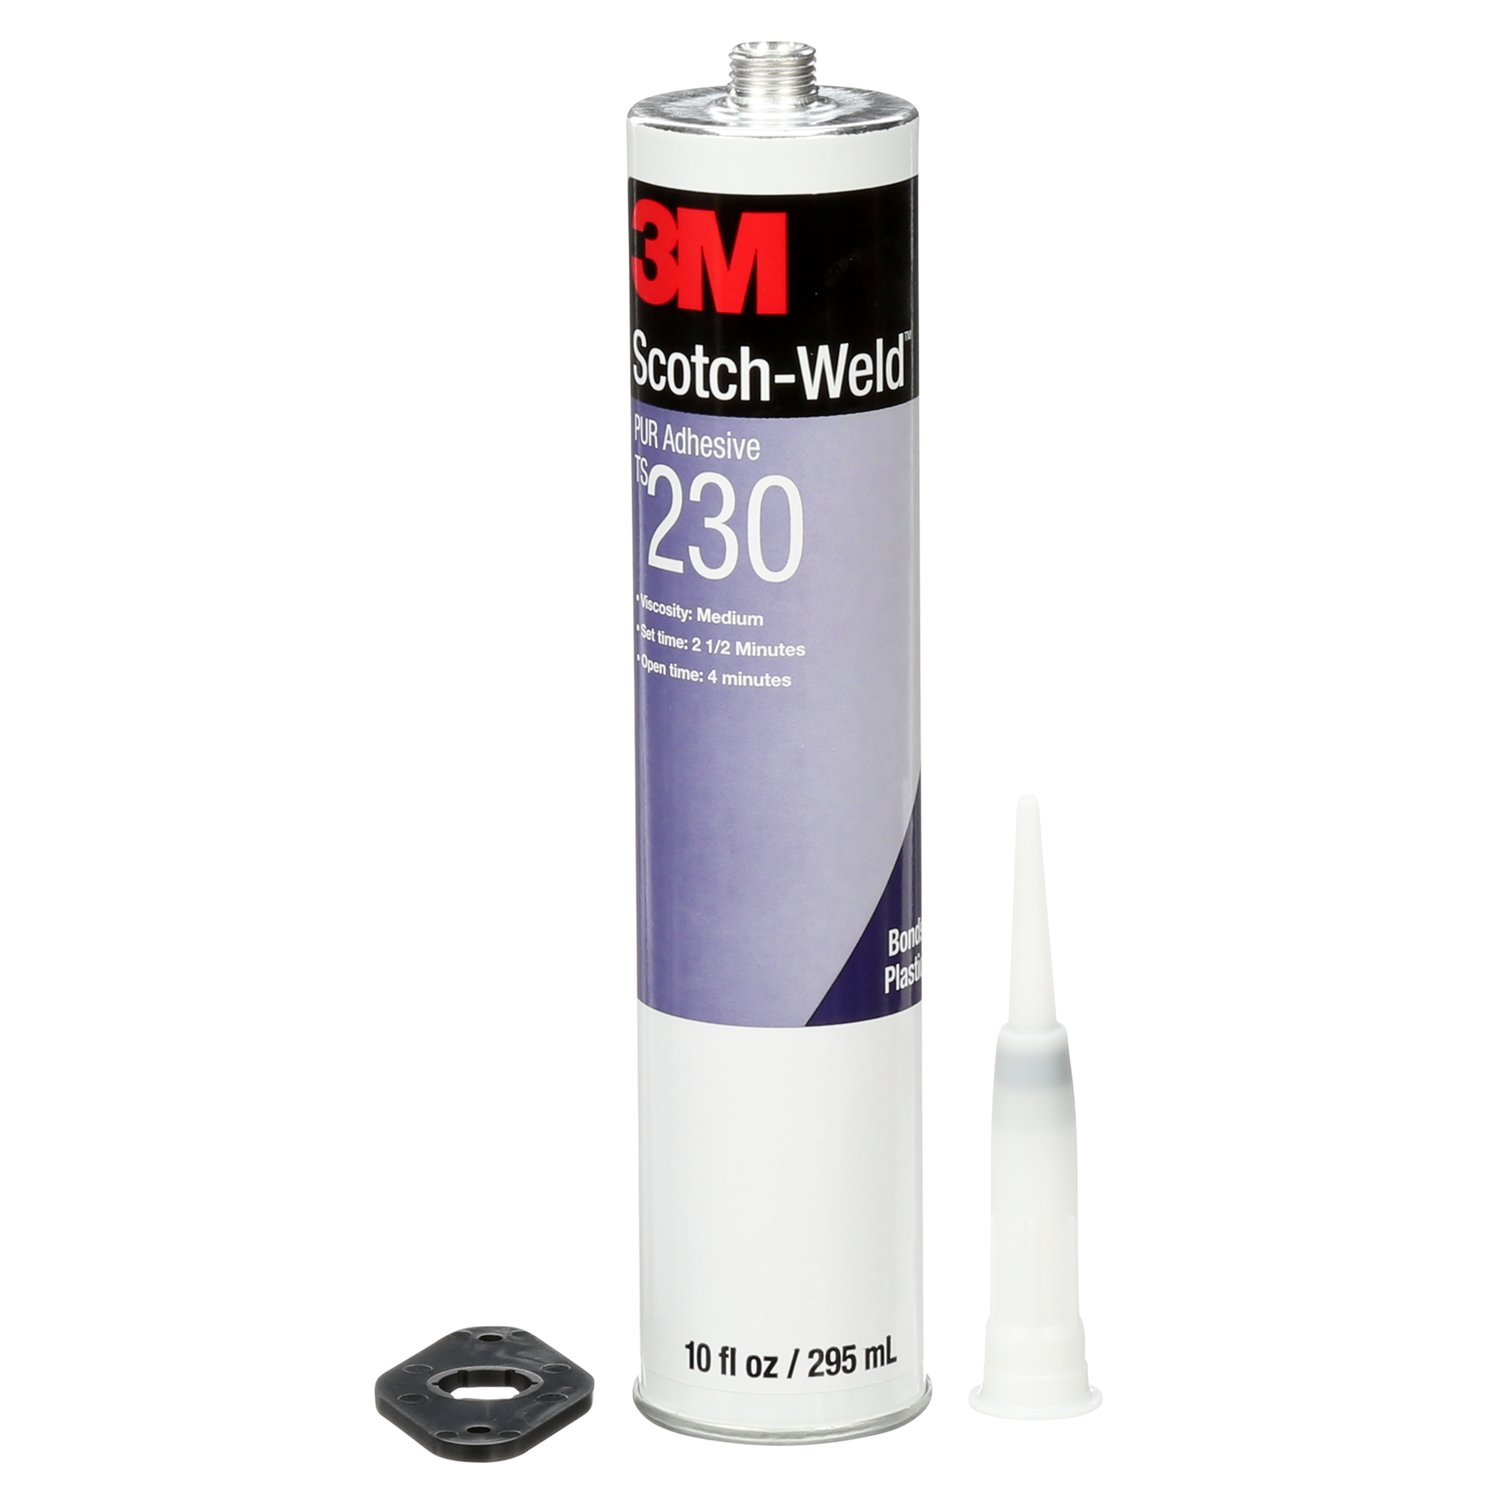 7000000898 - 3M Scotch-Weld PUR Adhesive TS230, Off-White, 1/10 Gallon Cartridge, 5
Bottle/Case